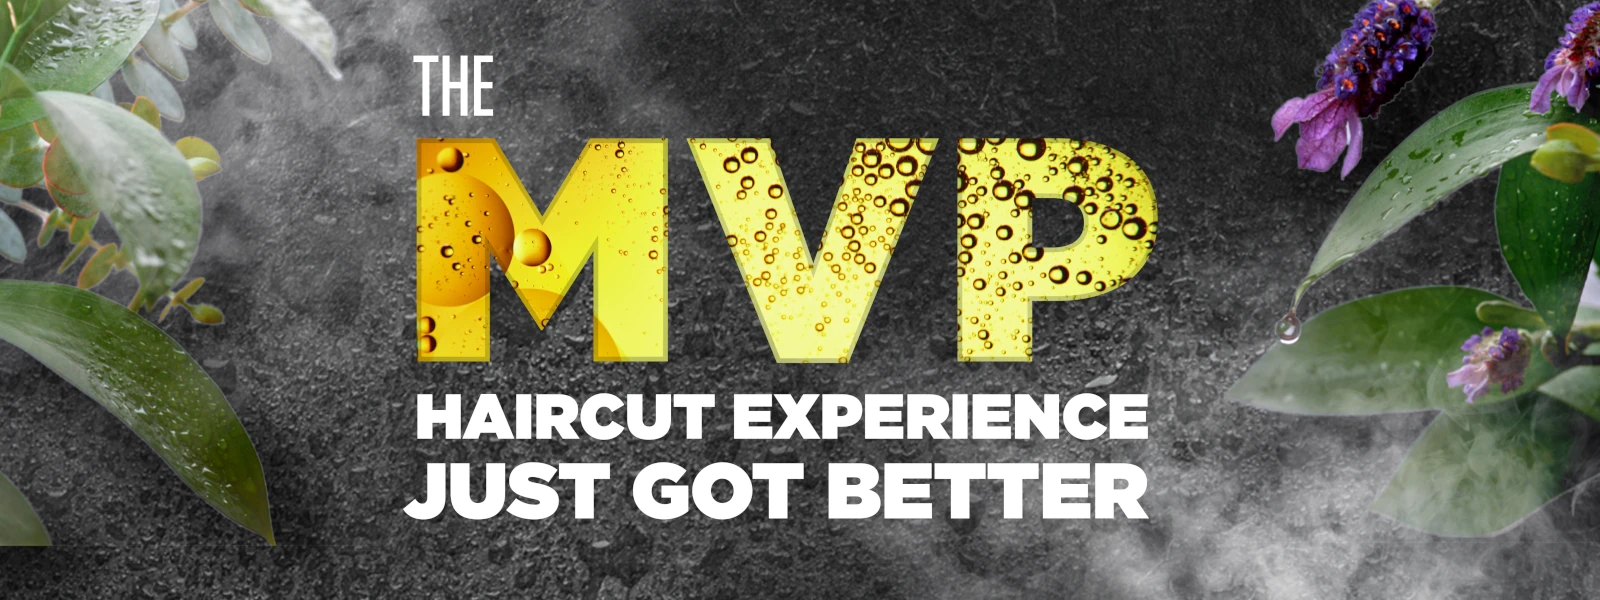 Sport Clips MVP Haircut Logo Reading - The MVP Haircut Experience Just Got Better